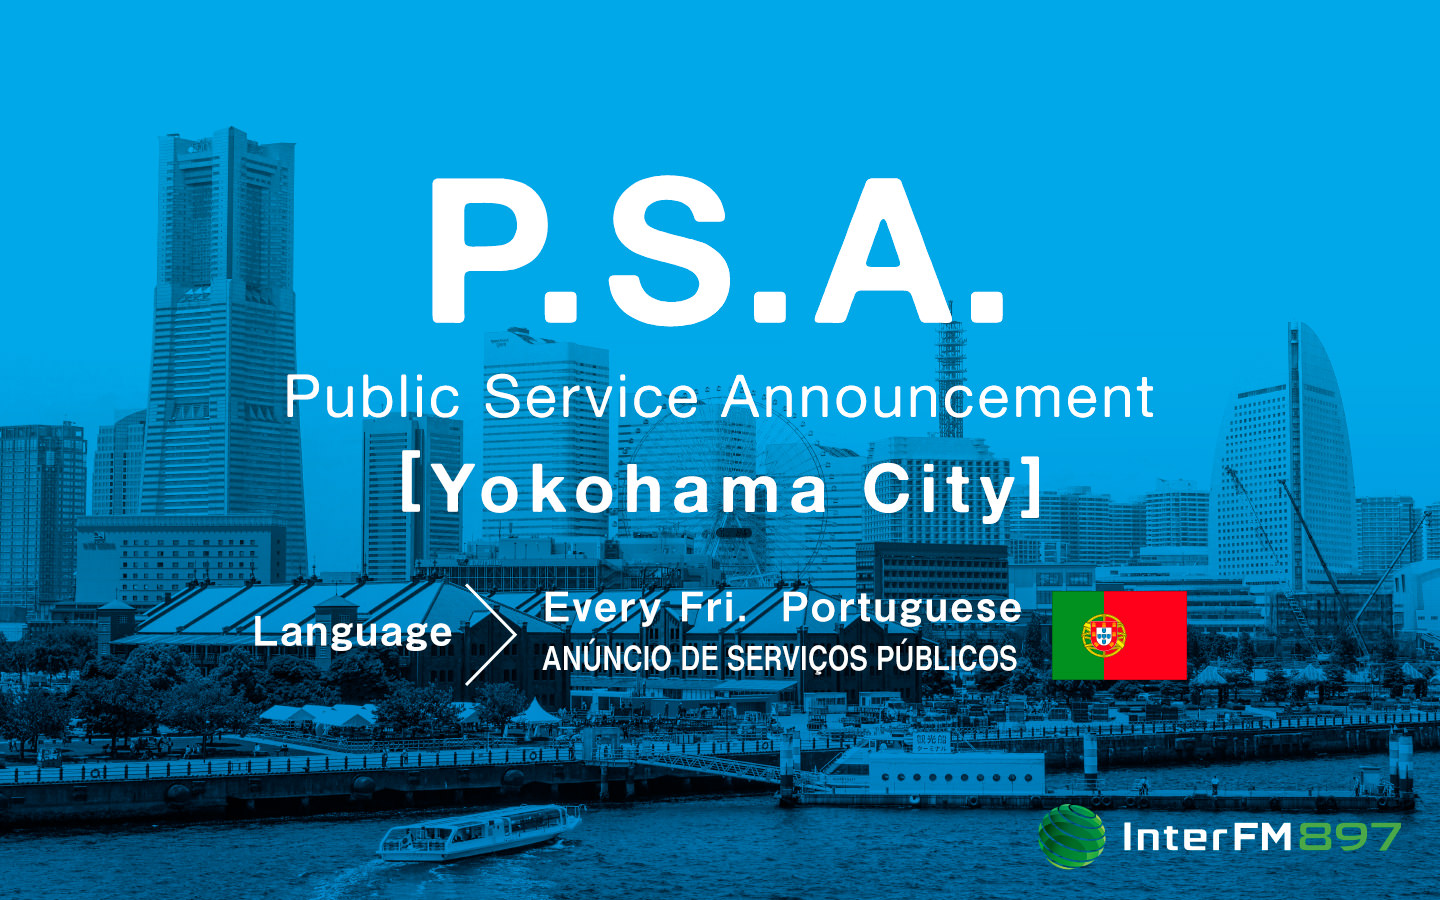 Public Service Announcement, Cidade de Yokohama (Português)